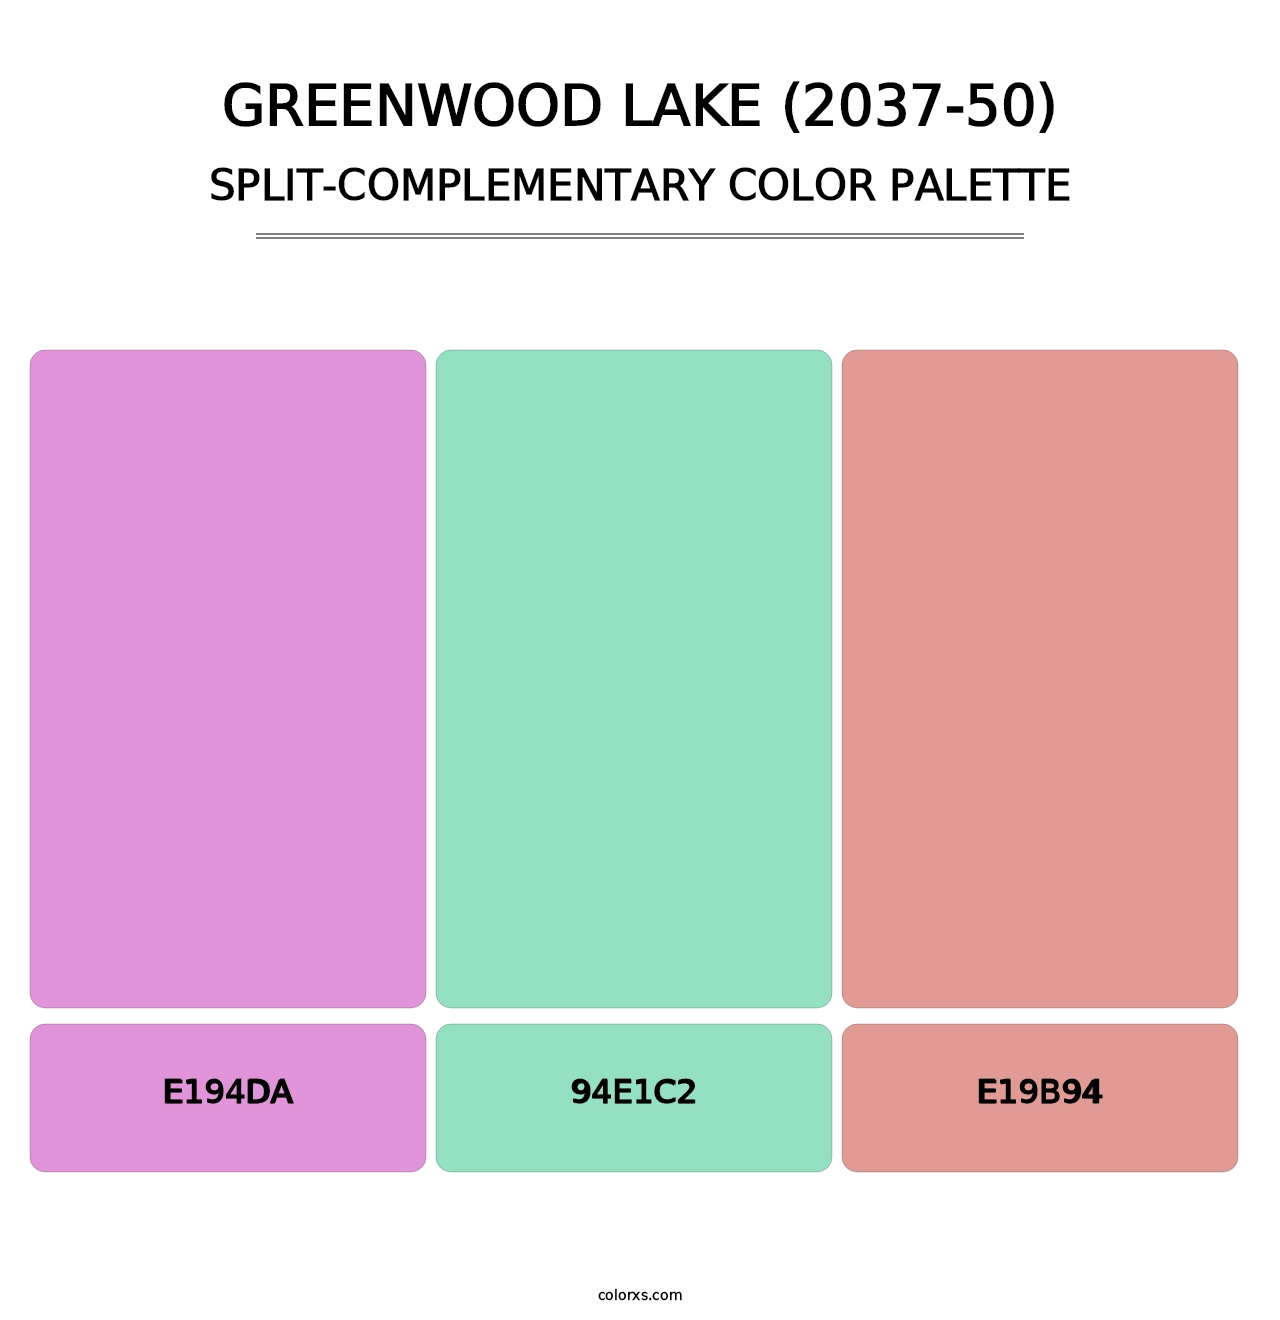 Greenwood Lake (2037-50) - Split-Complementary Color Palette